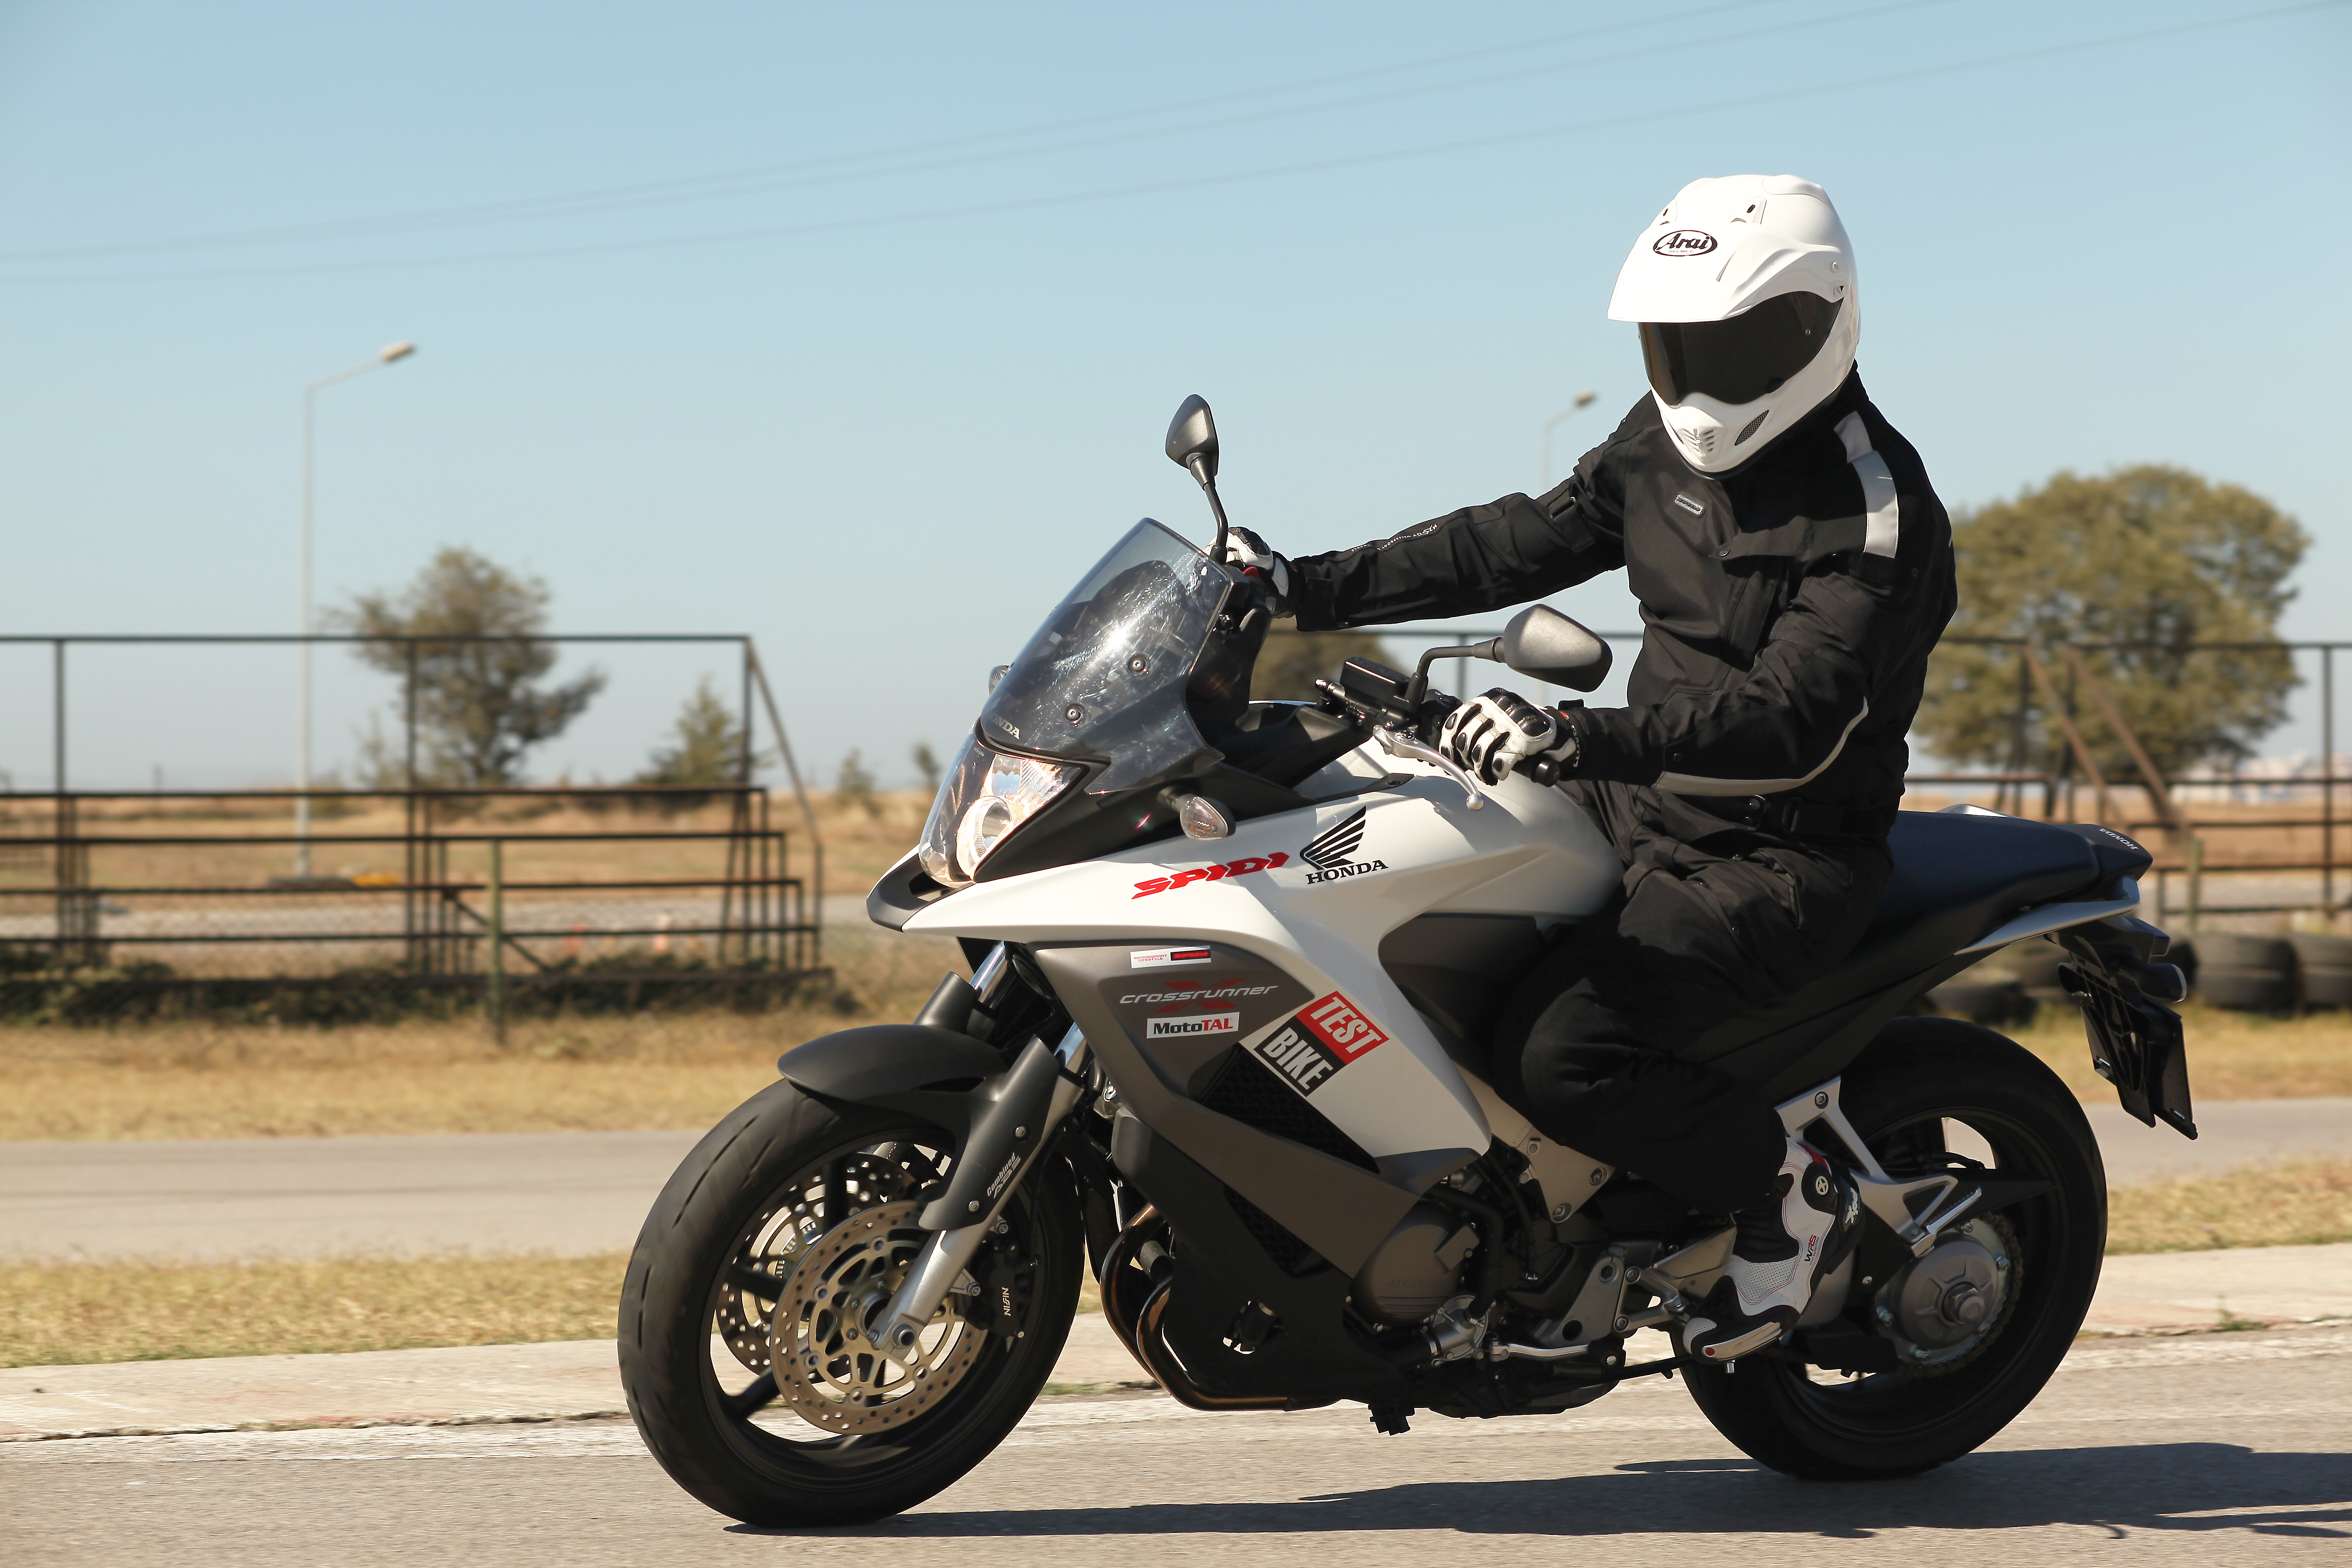 Honda vfr800x crossrunner: review, history, specs - bikeswiki.com, japanese motorcycle encyclopedia